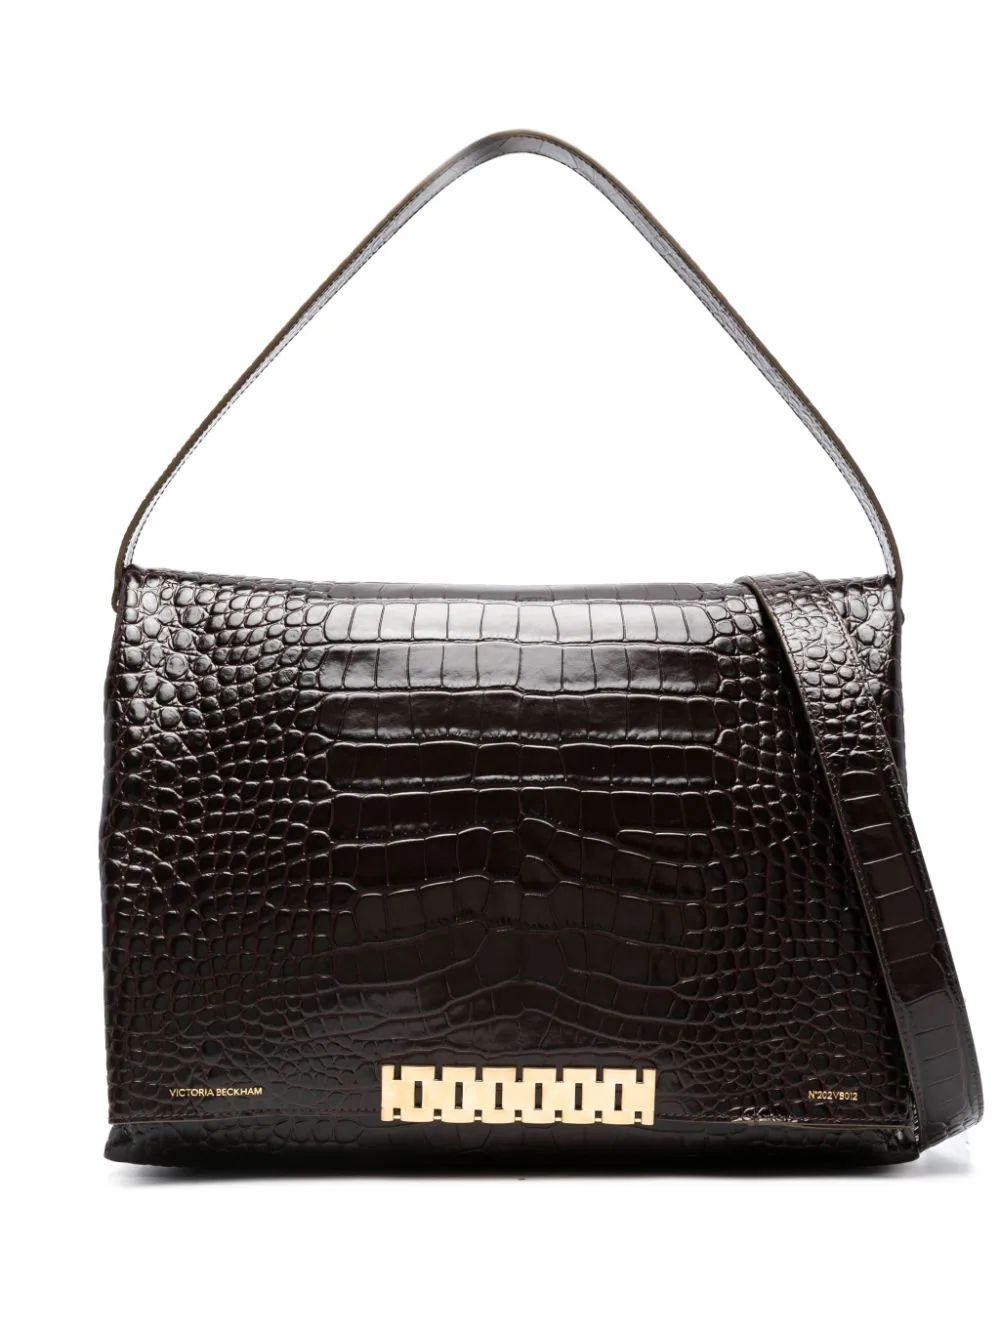 Victoria Beckham Large Chain Leather Shoulder Bag - Farfetch | Farfetch Global